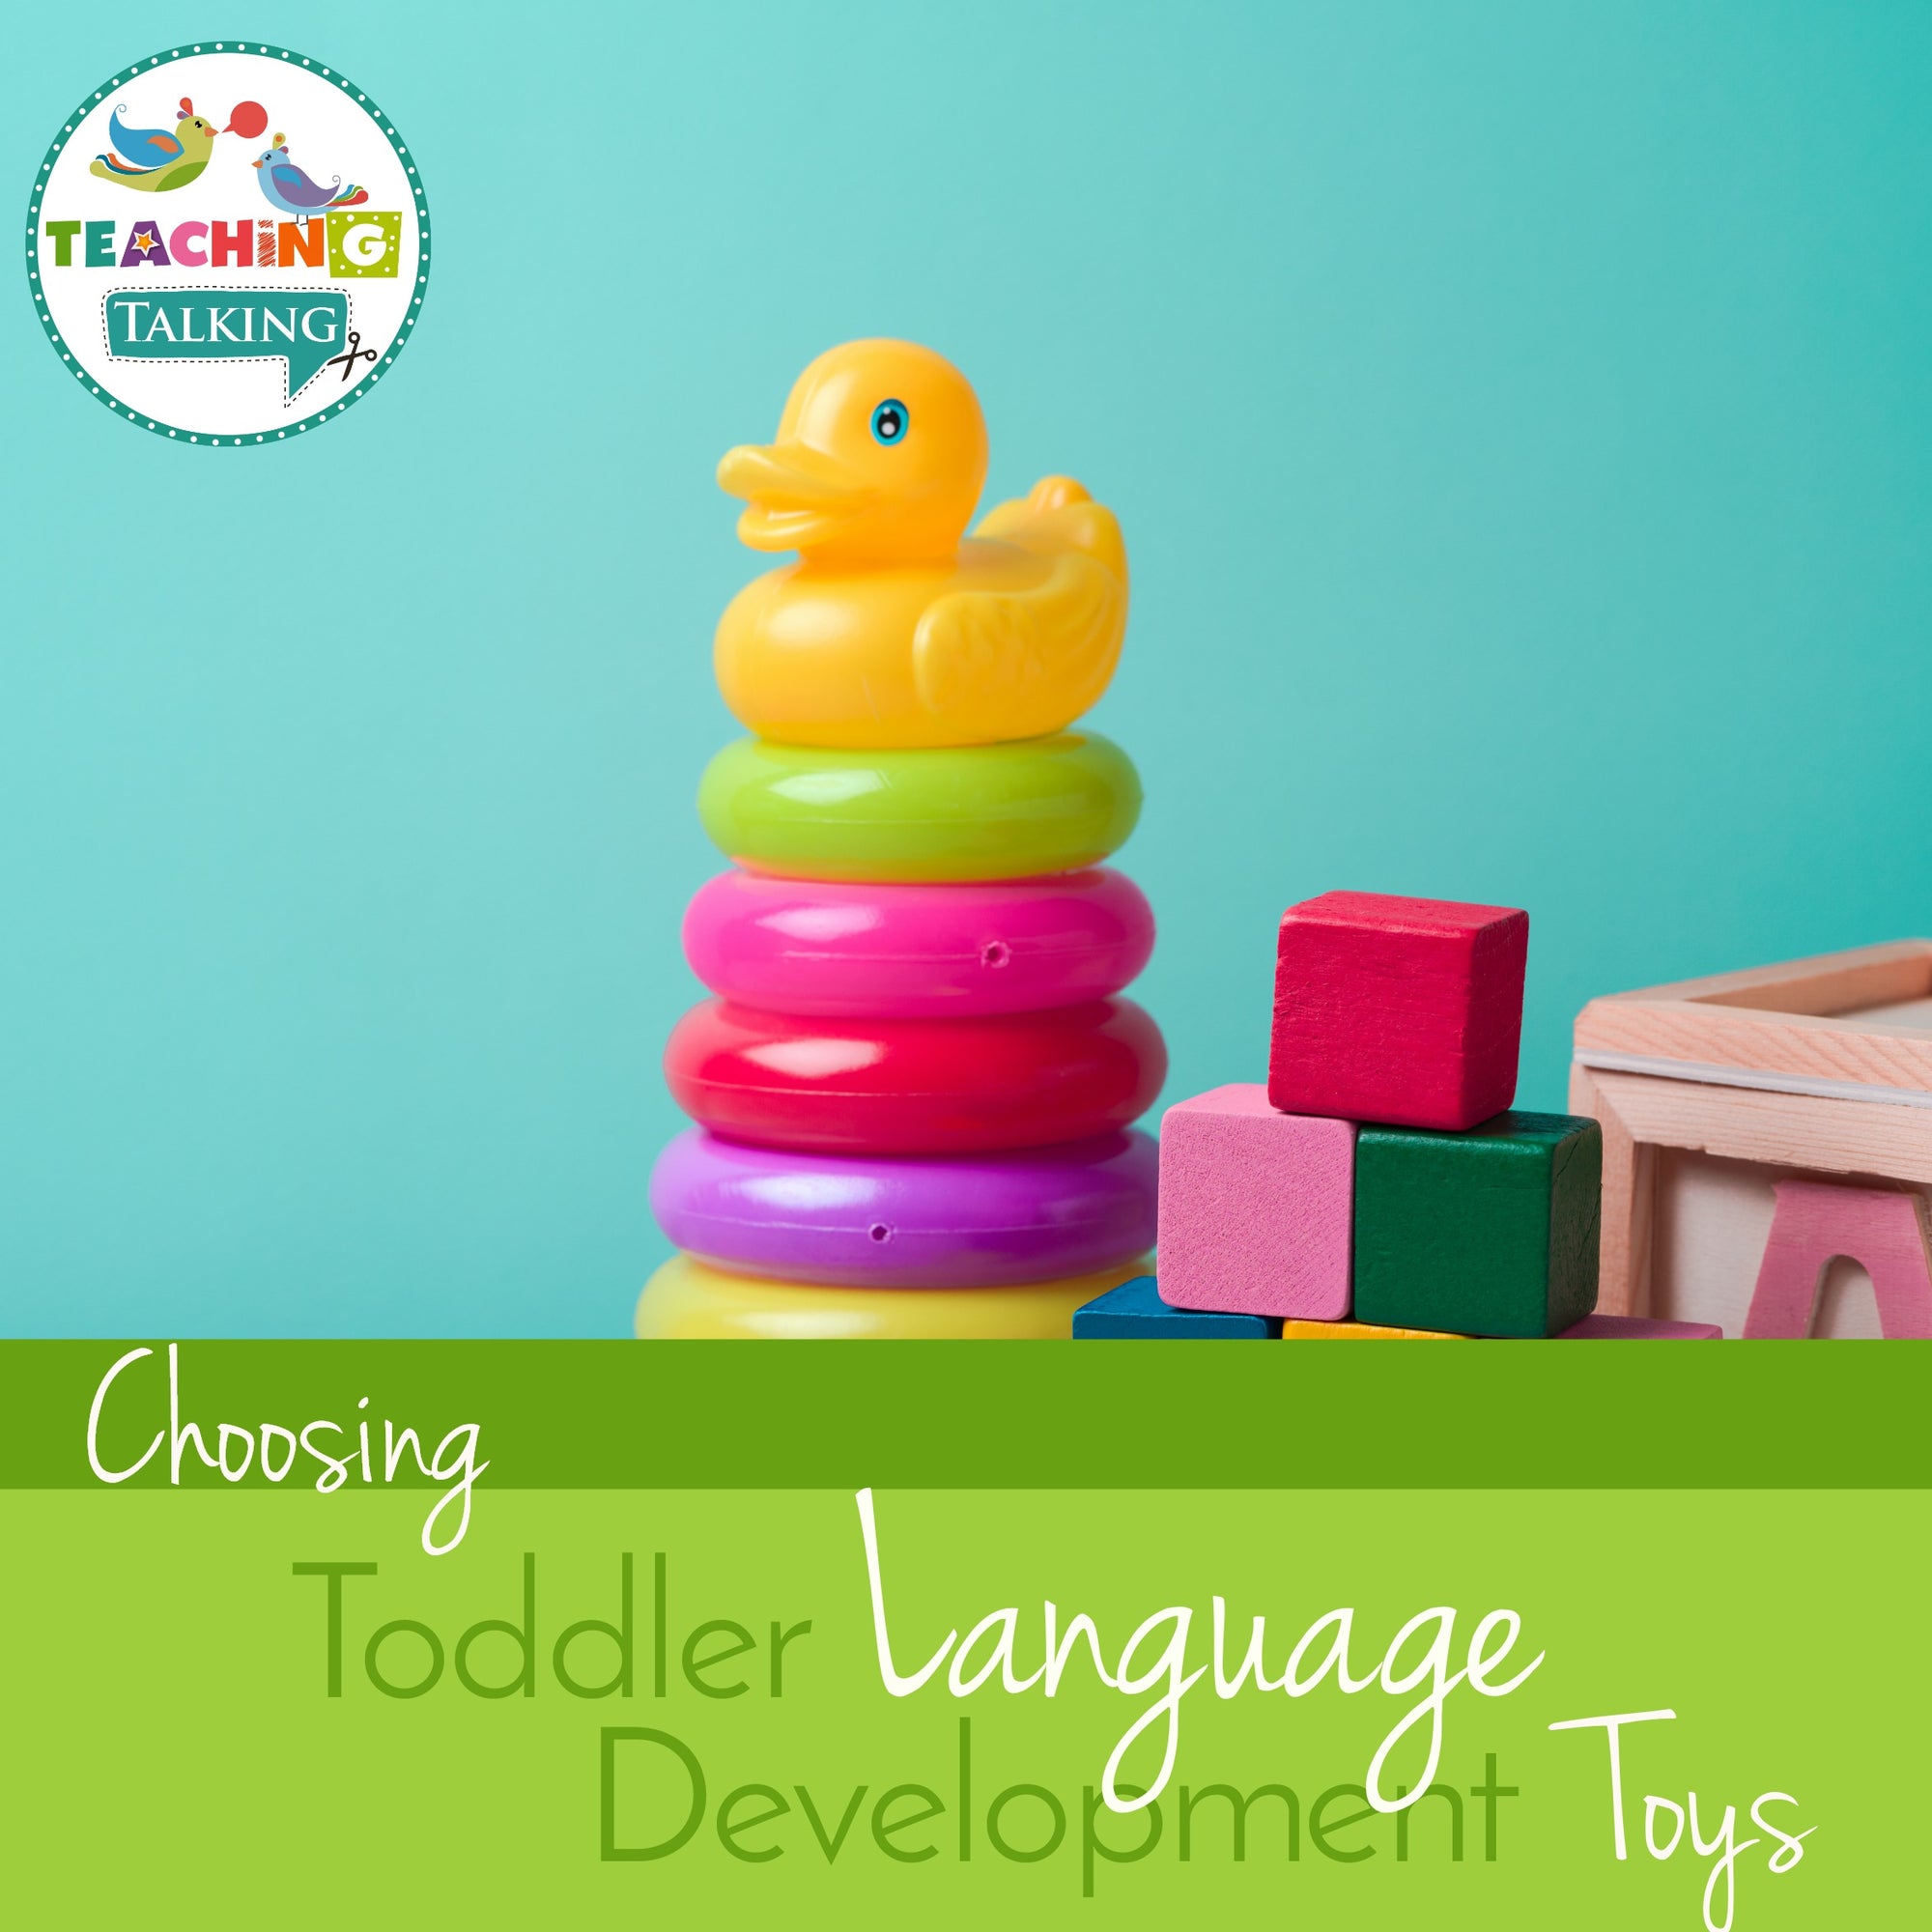 Tips for Choosing Toddler Language Development Toys